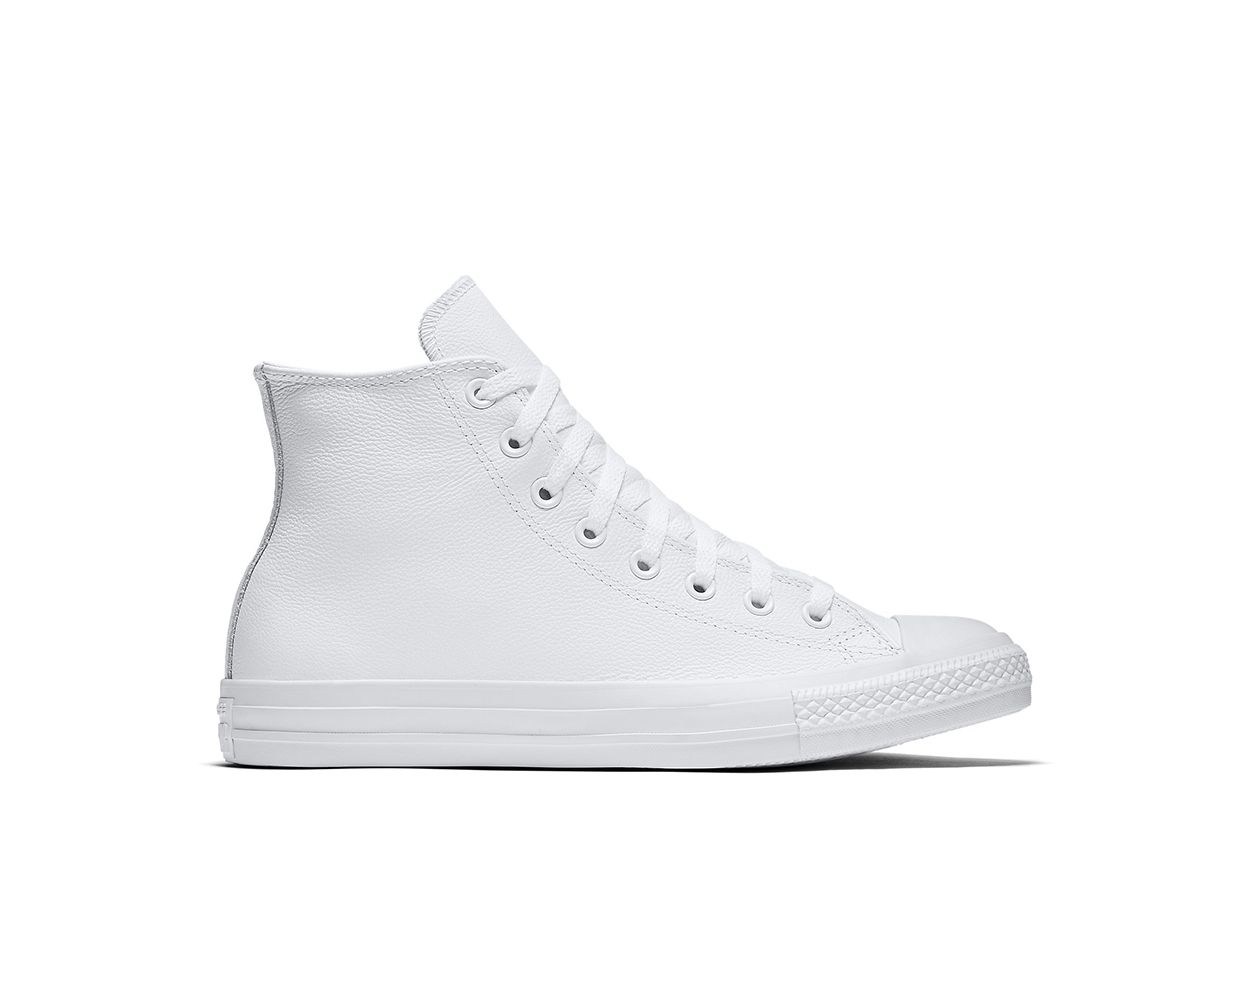 Converse Chuck Taylor All Star Leather Hi in White Monochrome | UJB Canada